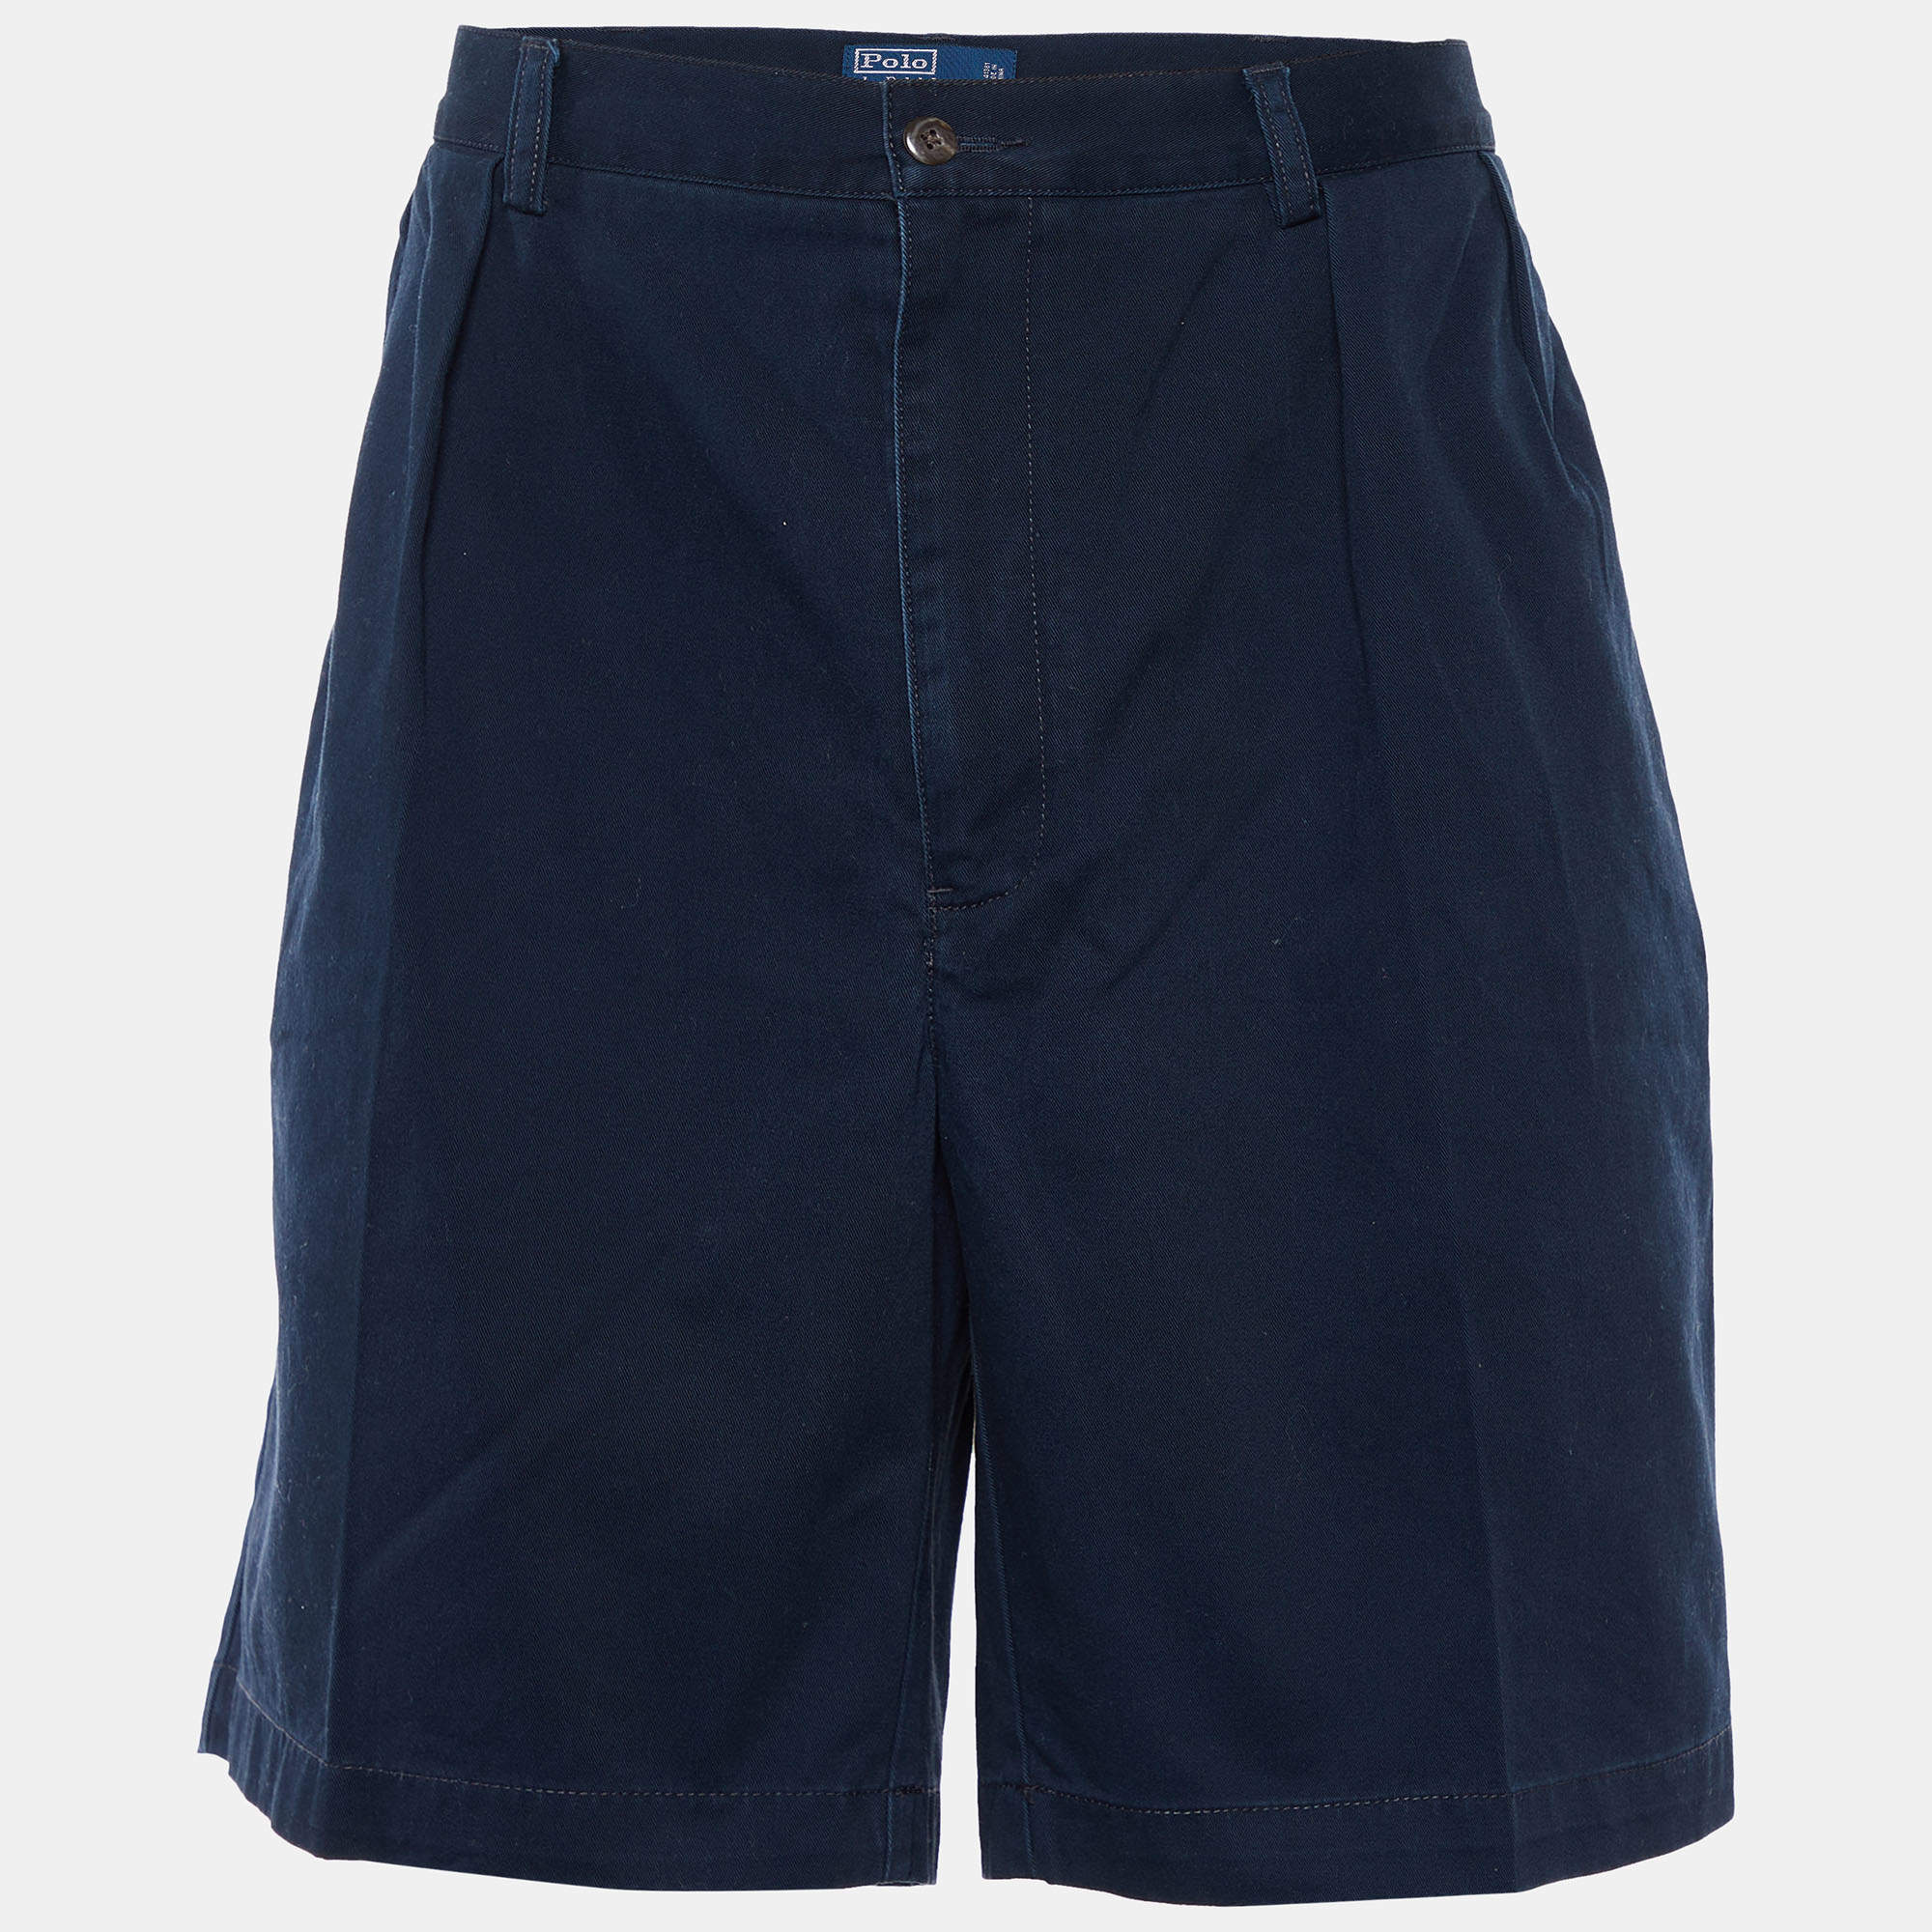 Stylish Polo by Ralph Lauren Men's Tyler Shorts - Size 36